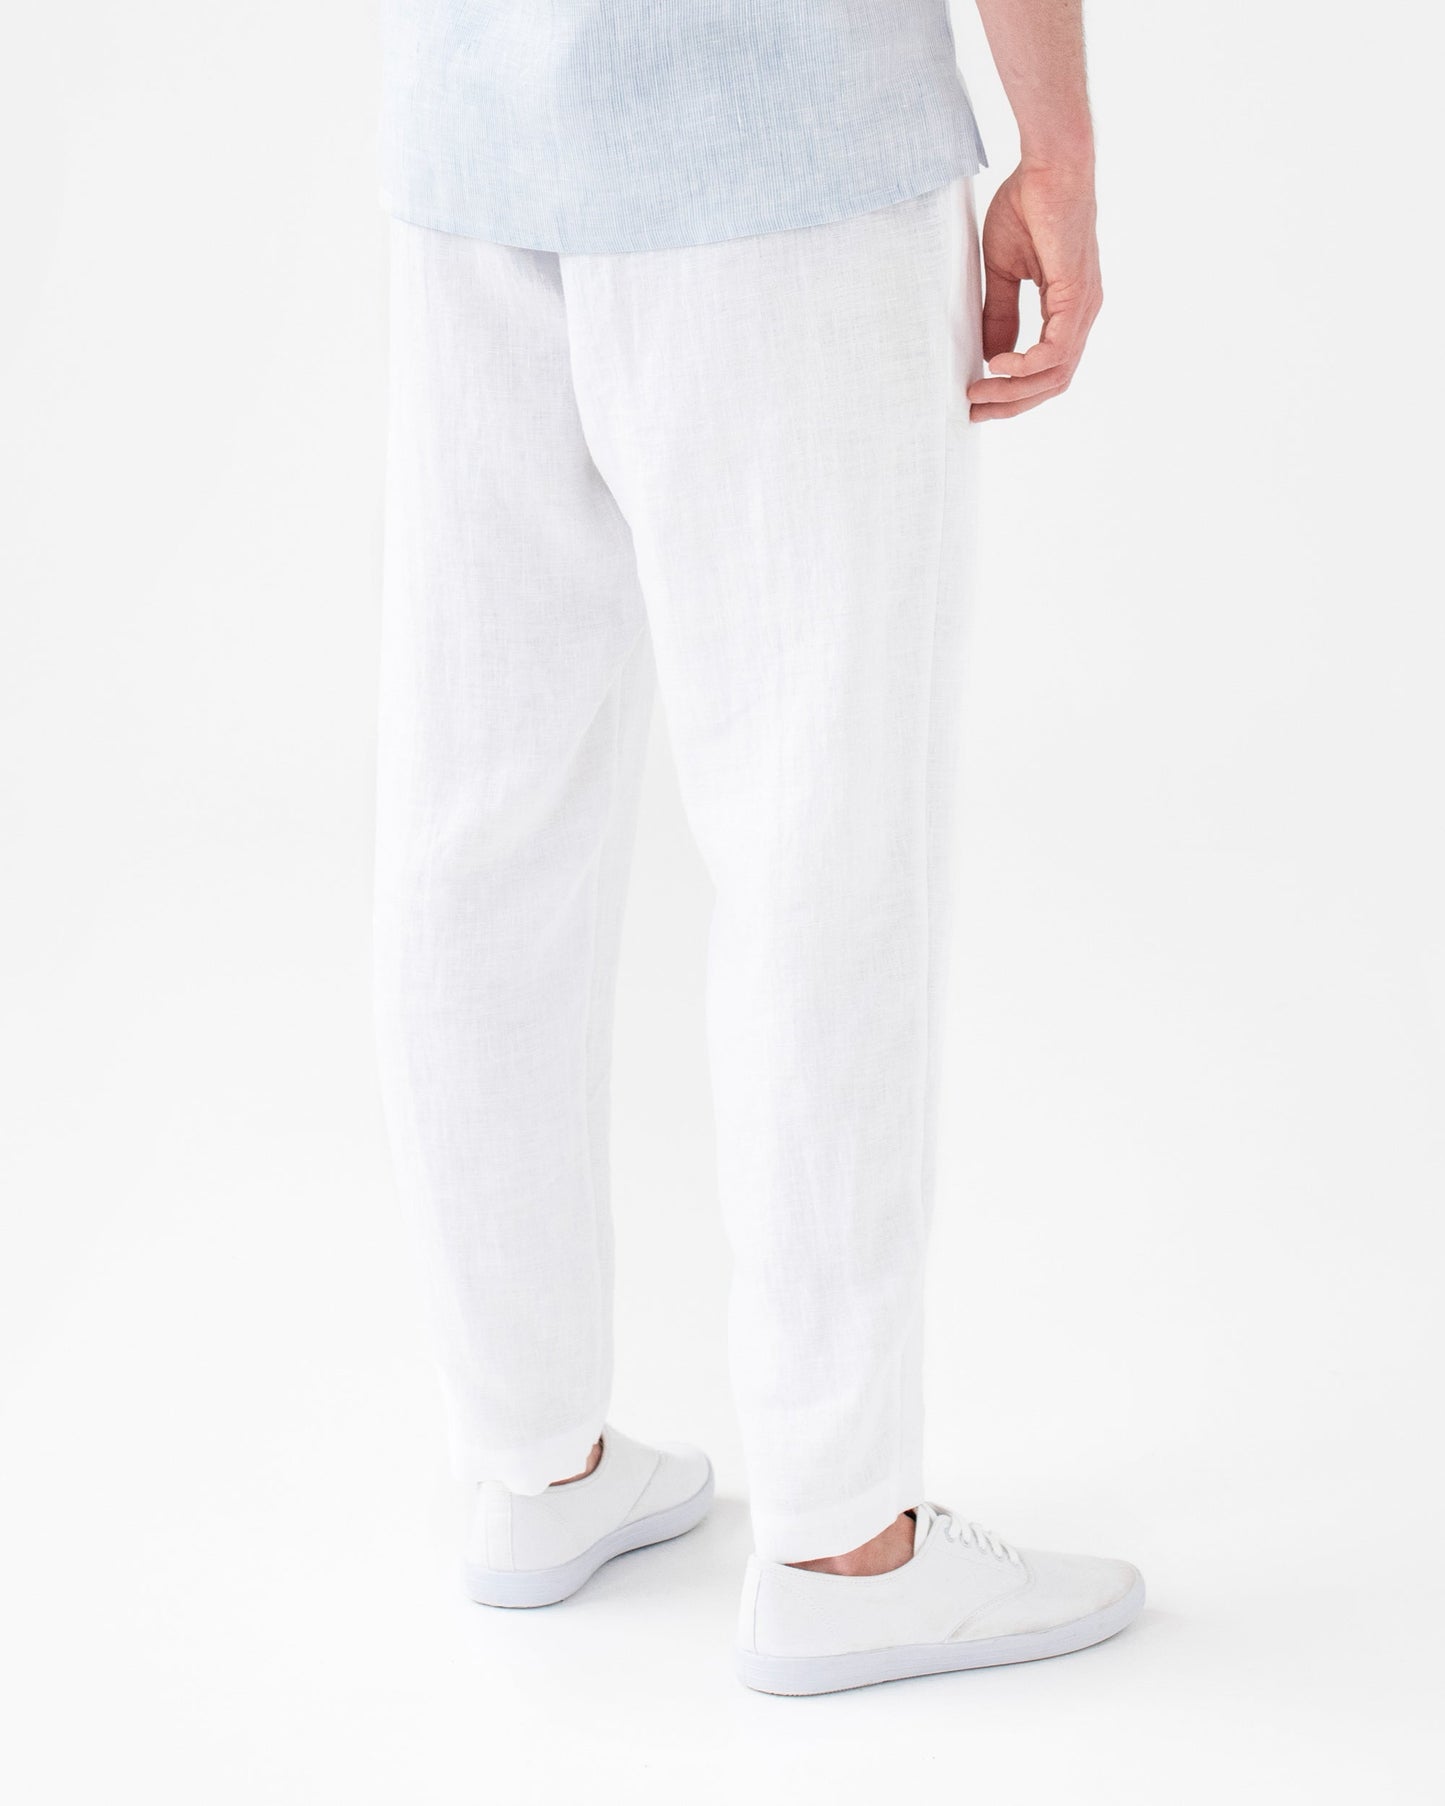 Men's linen pants TRUCKEE in white - MagicLinen